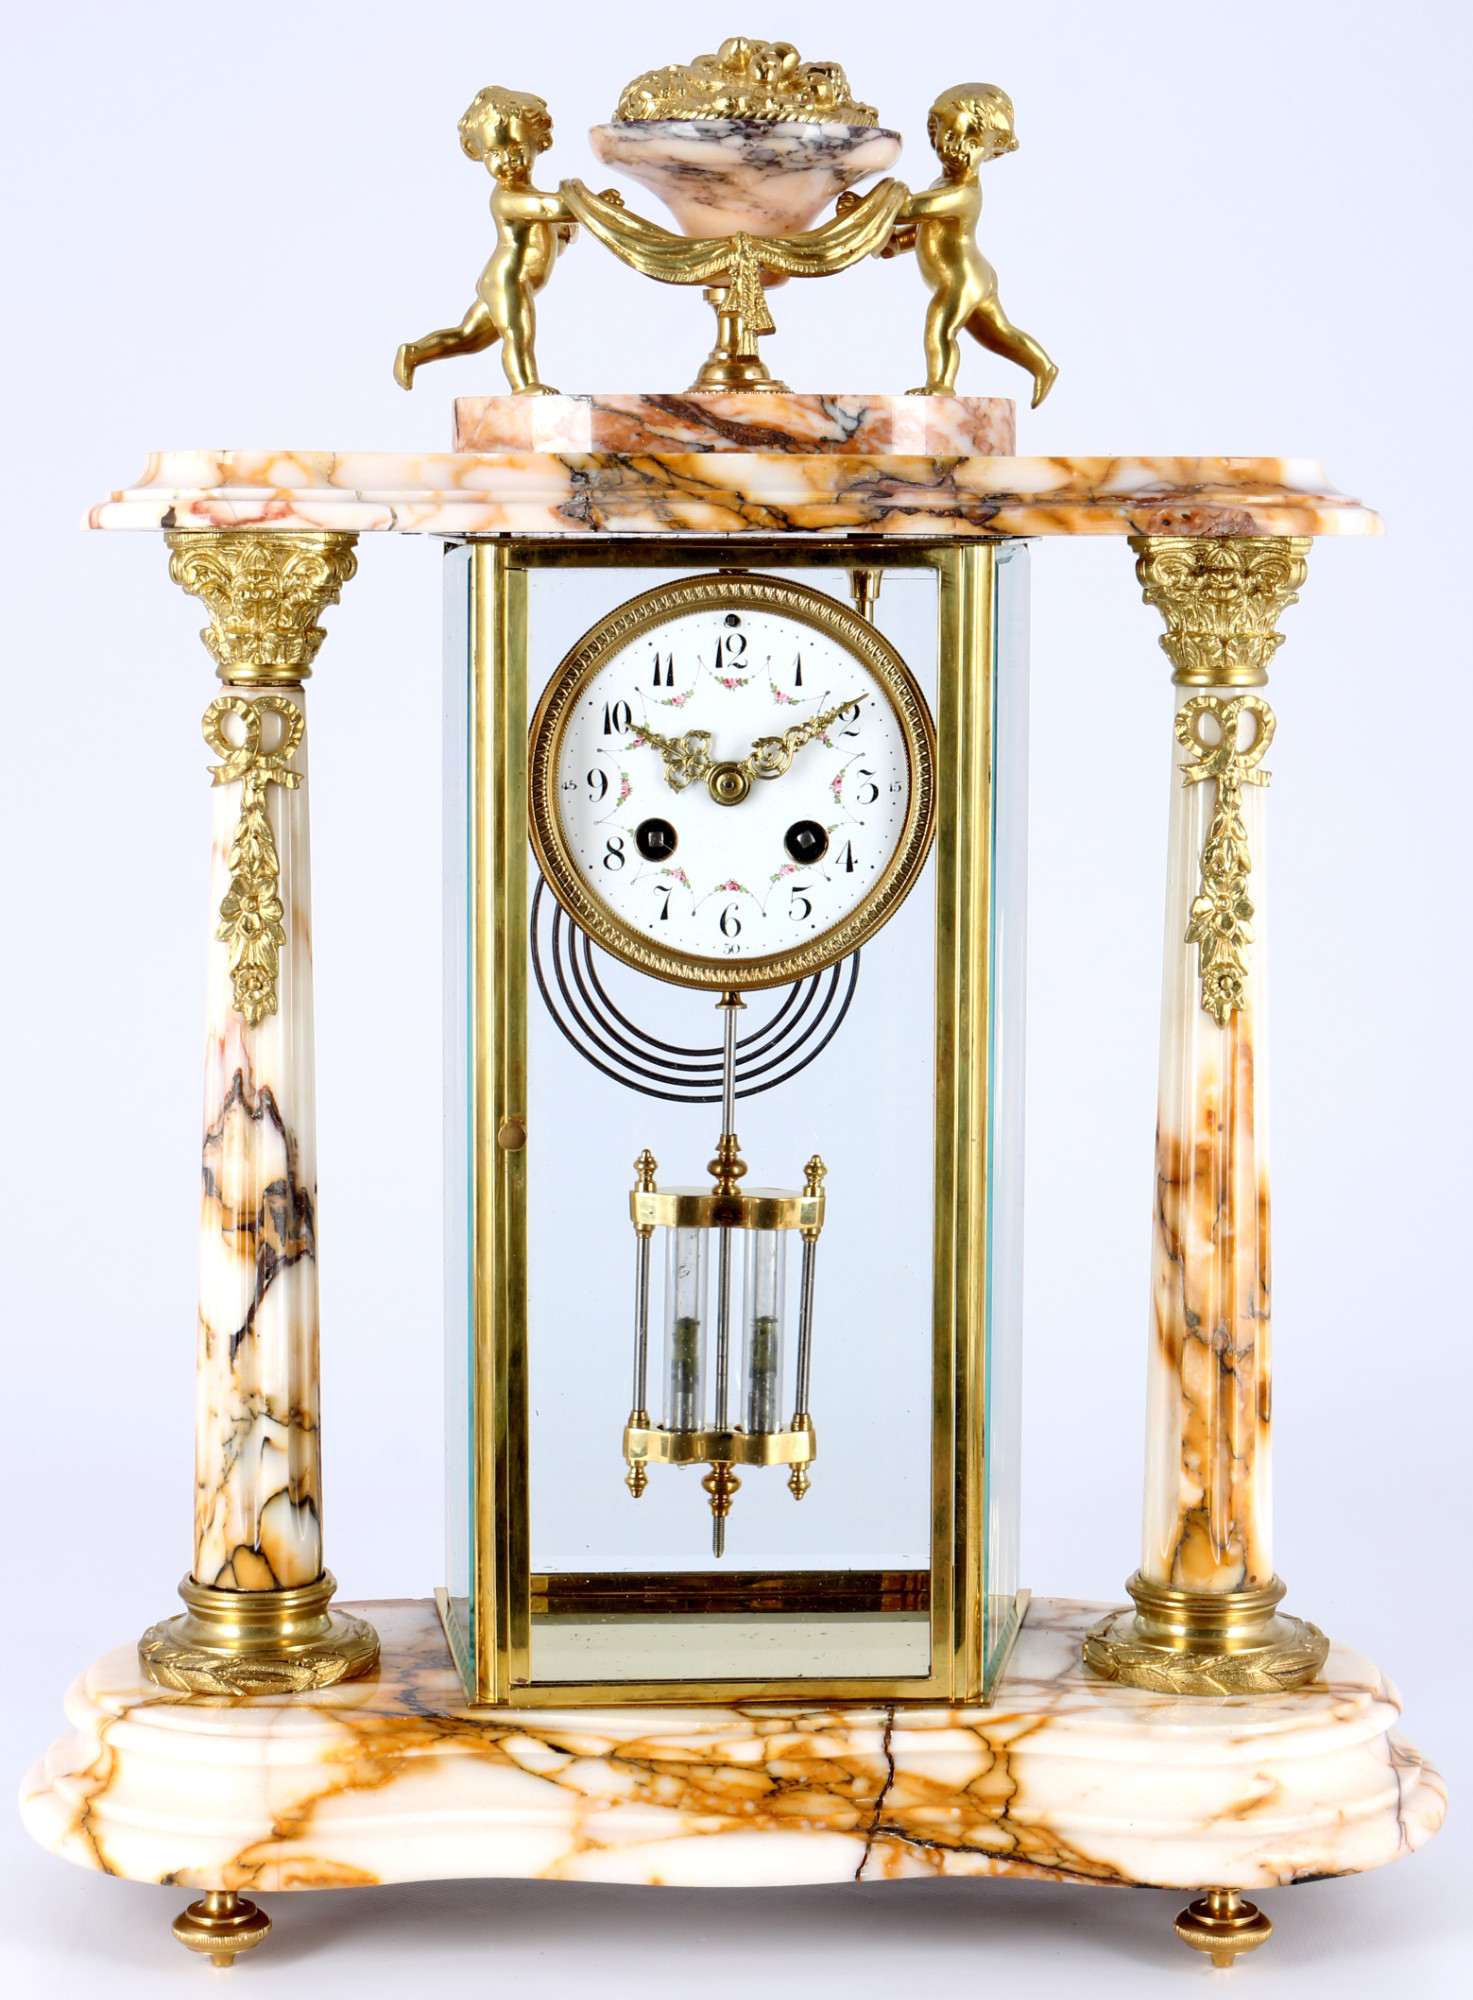 French glas mantel clock 19th century, Glaspendule mit Beisteller Frankreich 19. Jahrhundert, - Image 2 of 7